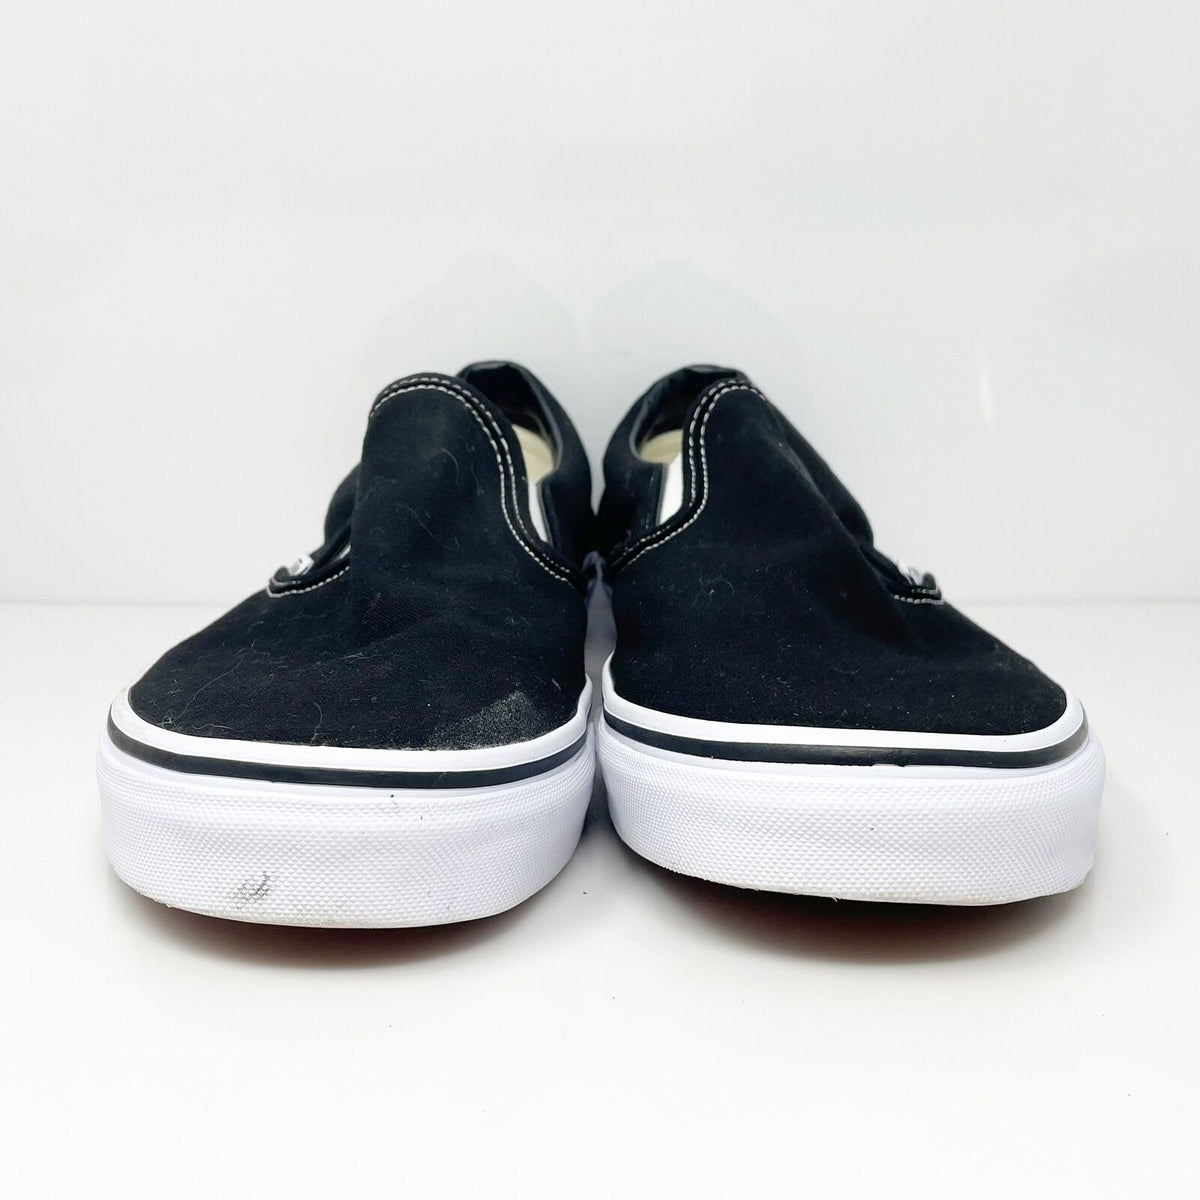 Vans Mens Classic 721565 Black Casual Shoes Sneakers Size 11.5 ...